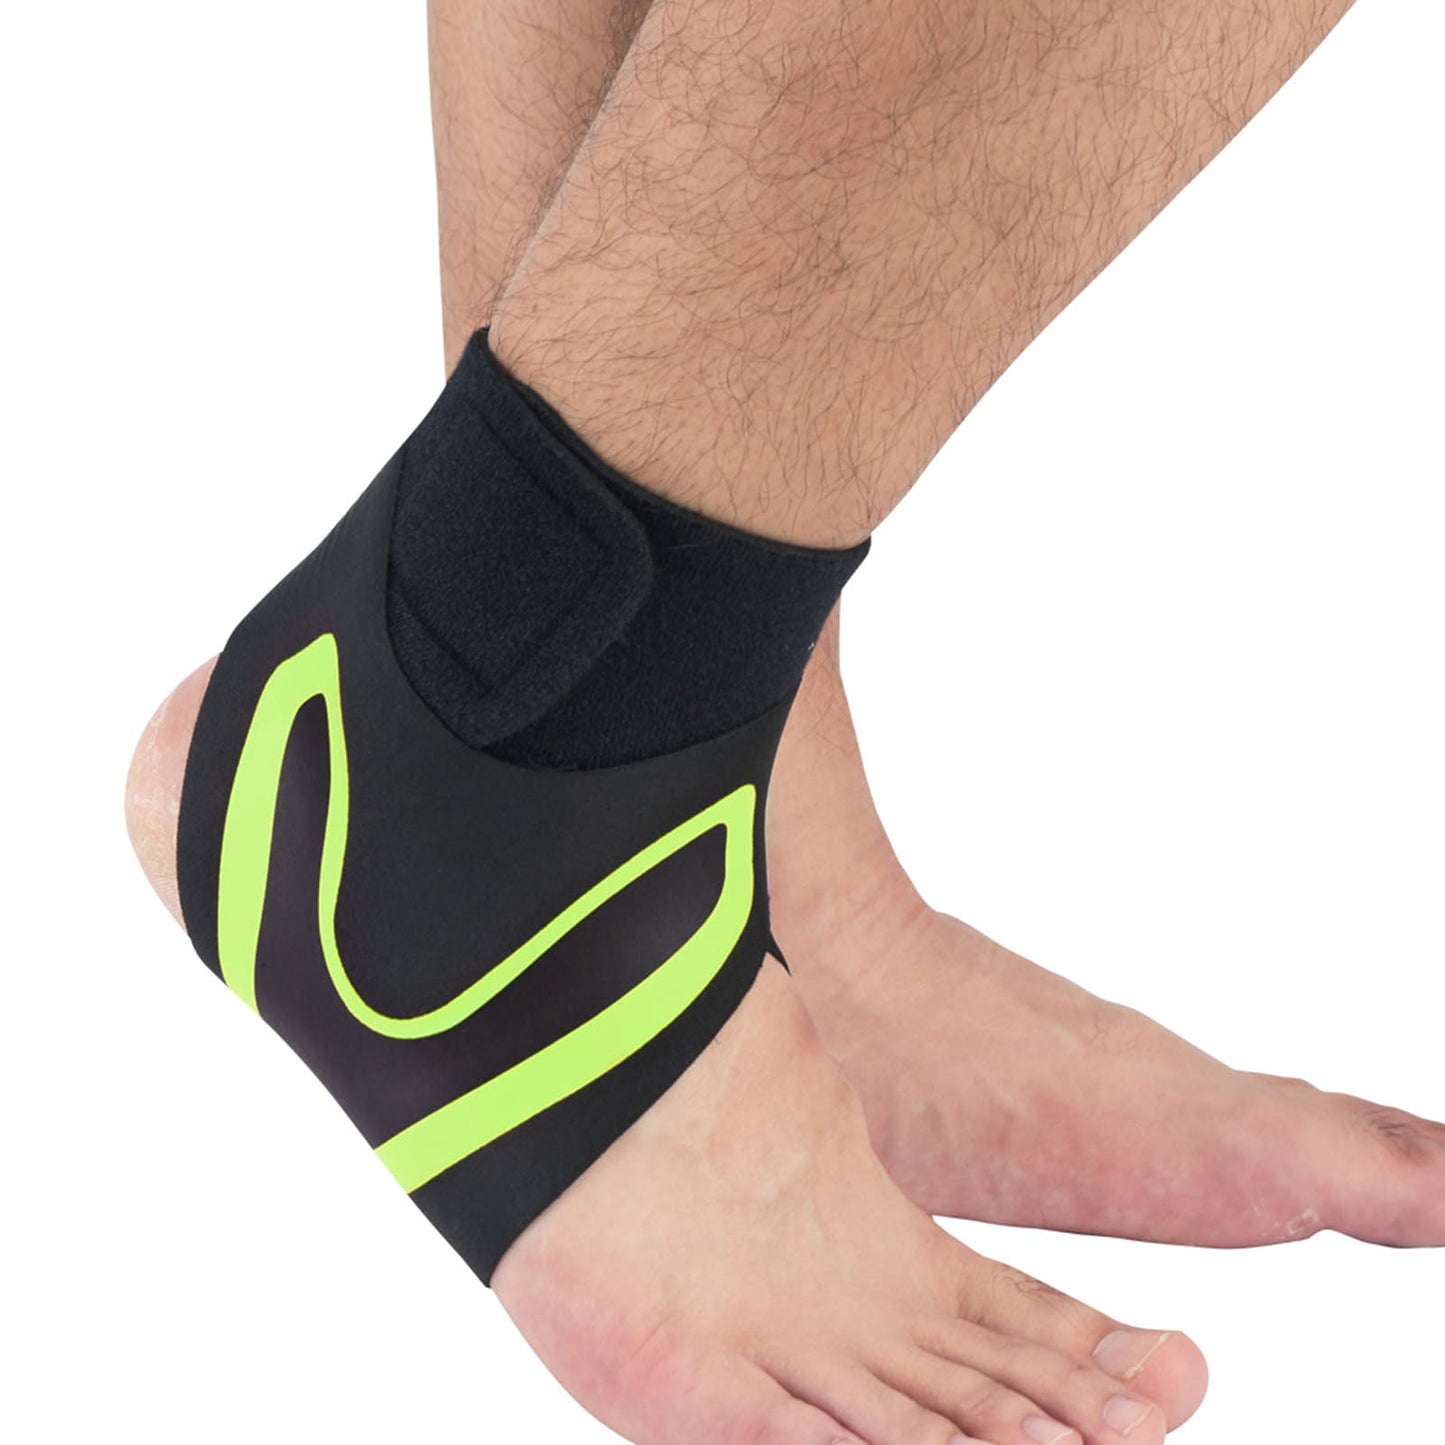 Compression Ankle Brace, Adjustable Straps, 1 Pair